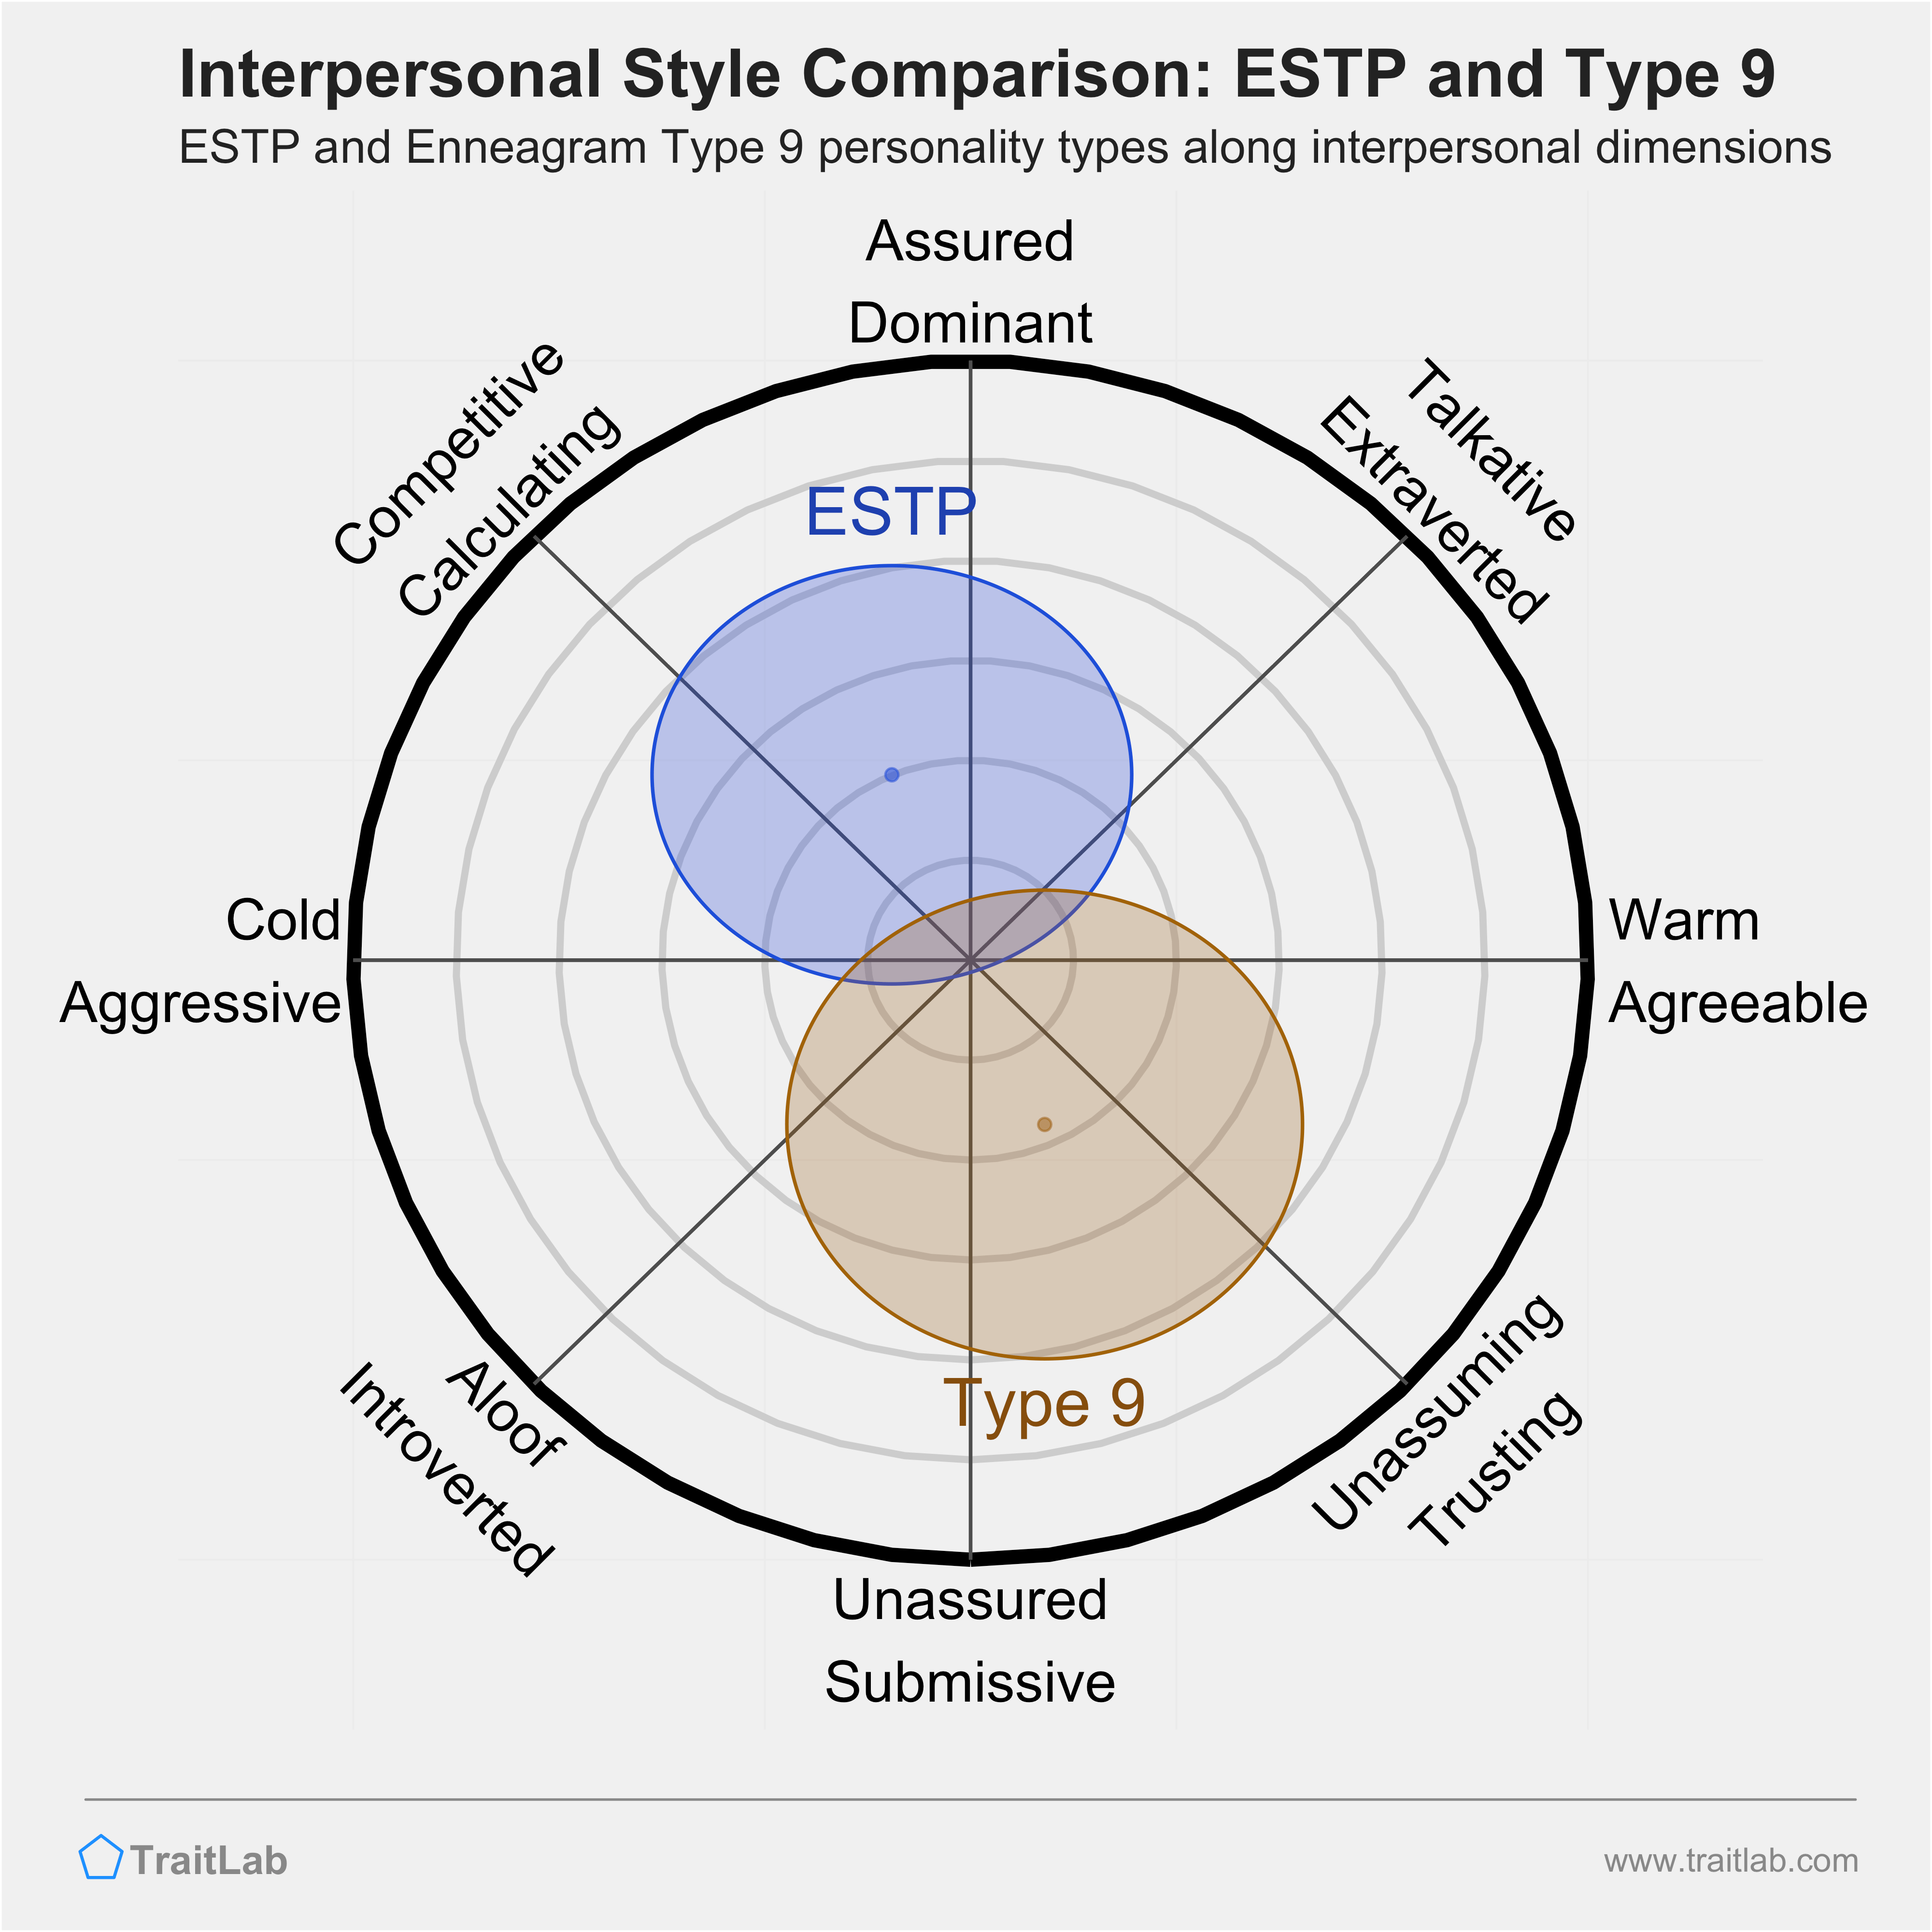 Enneagram ESTP and Type 9 comparison across interpersonal dimensions